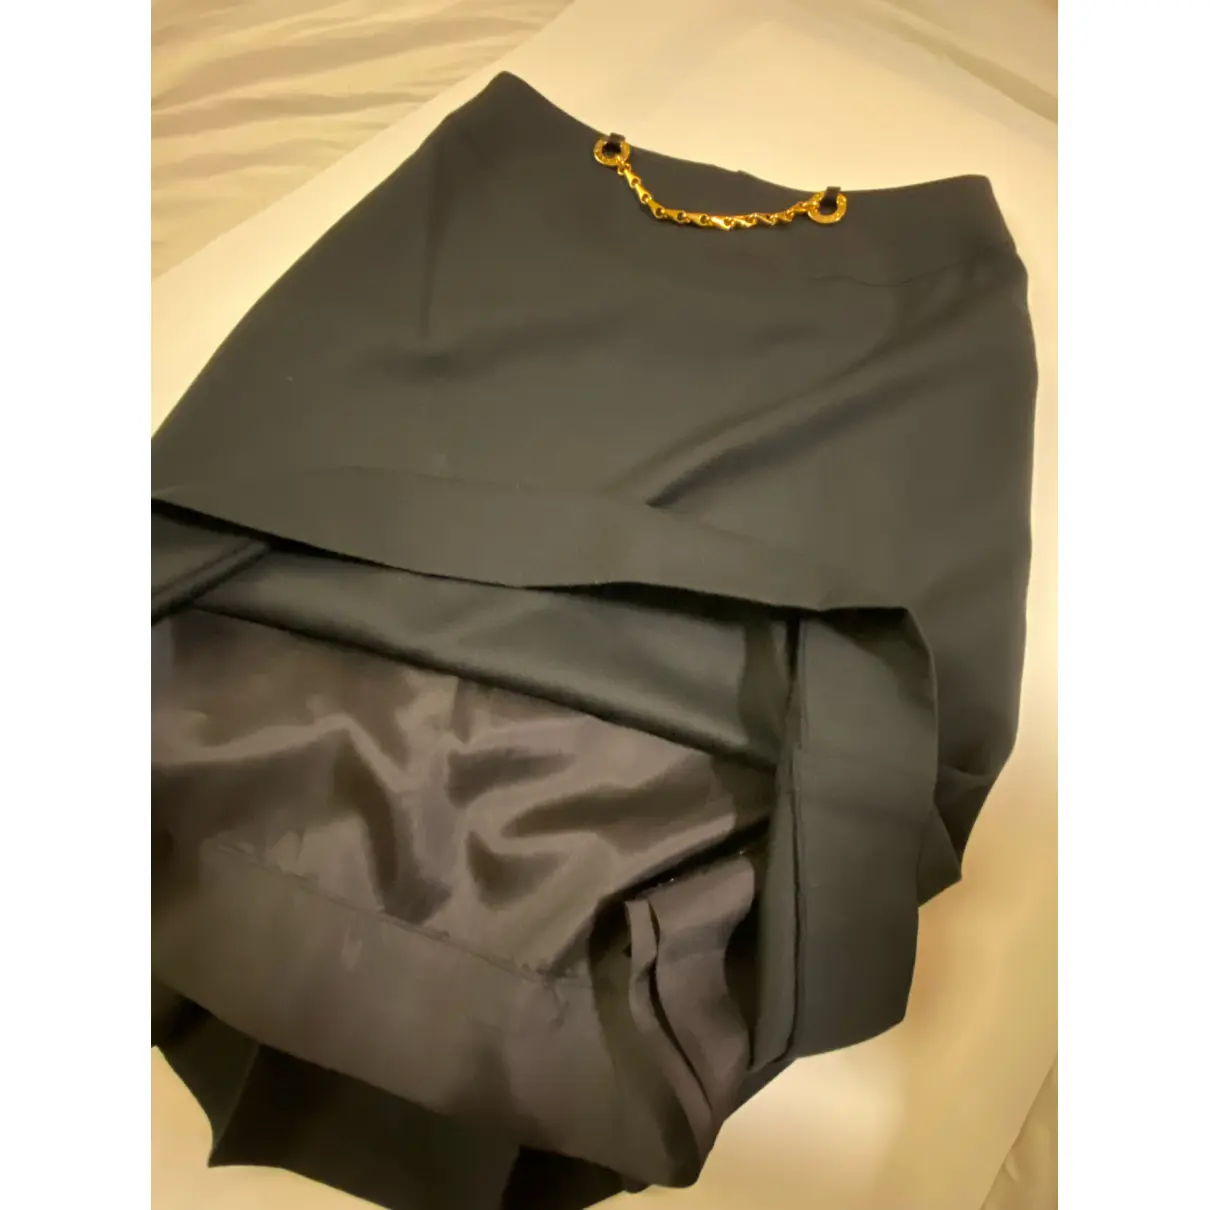 Wool mid-length skirt Celine